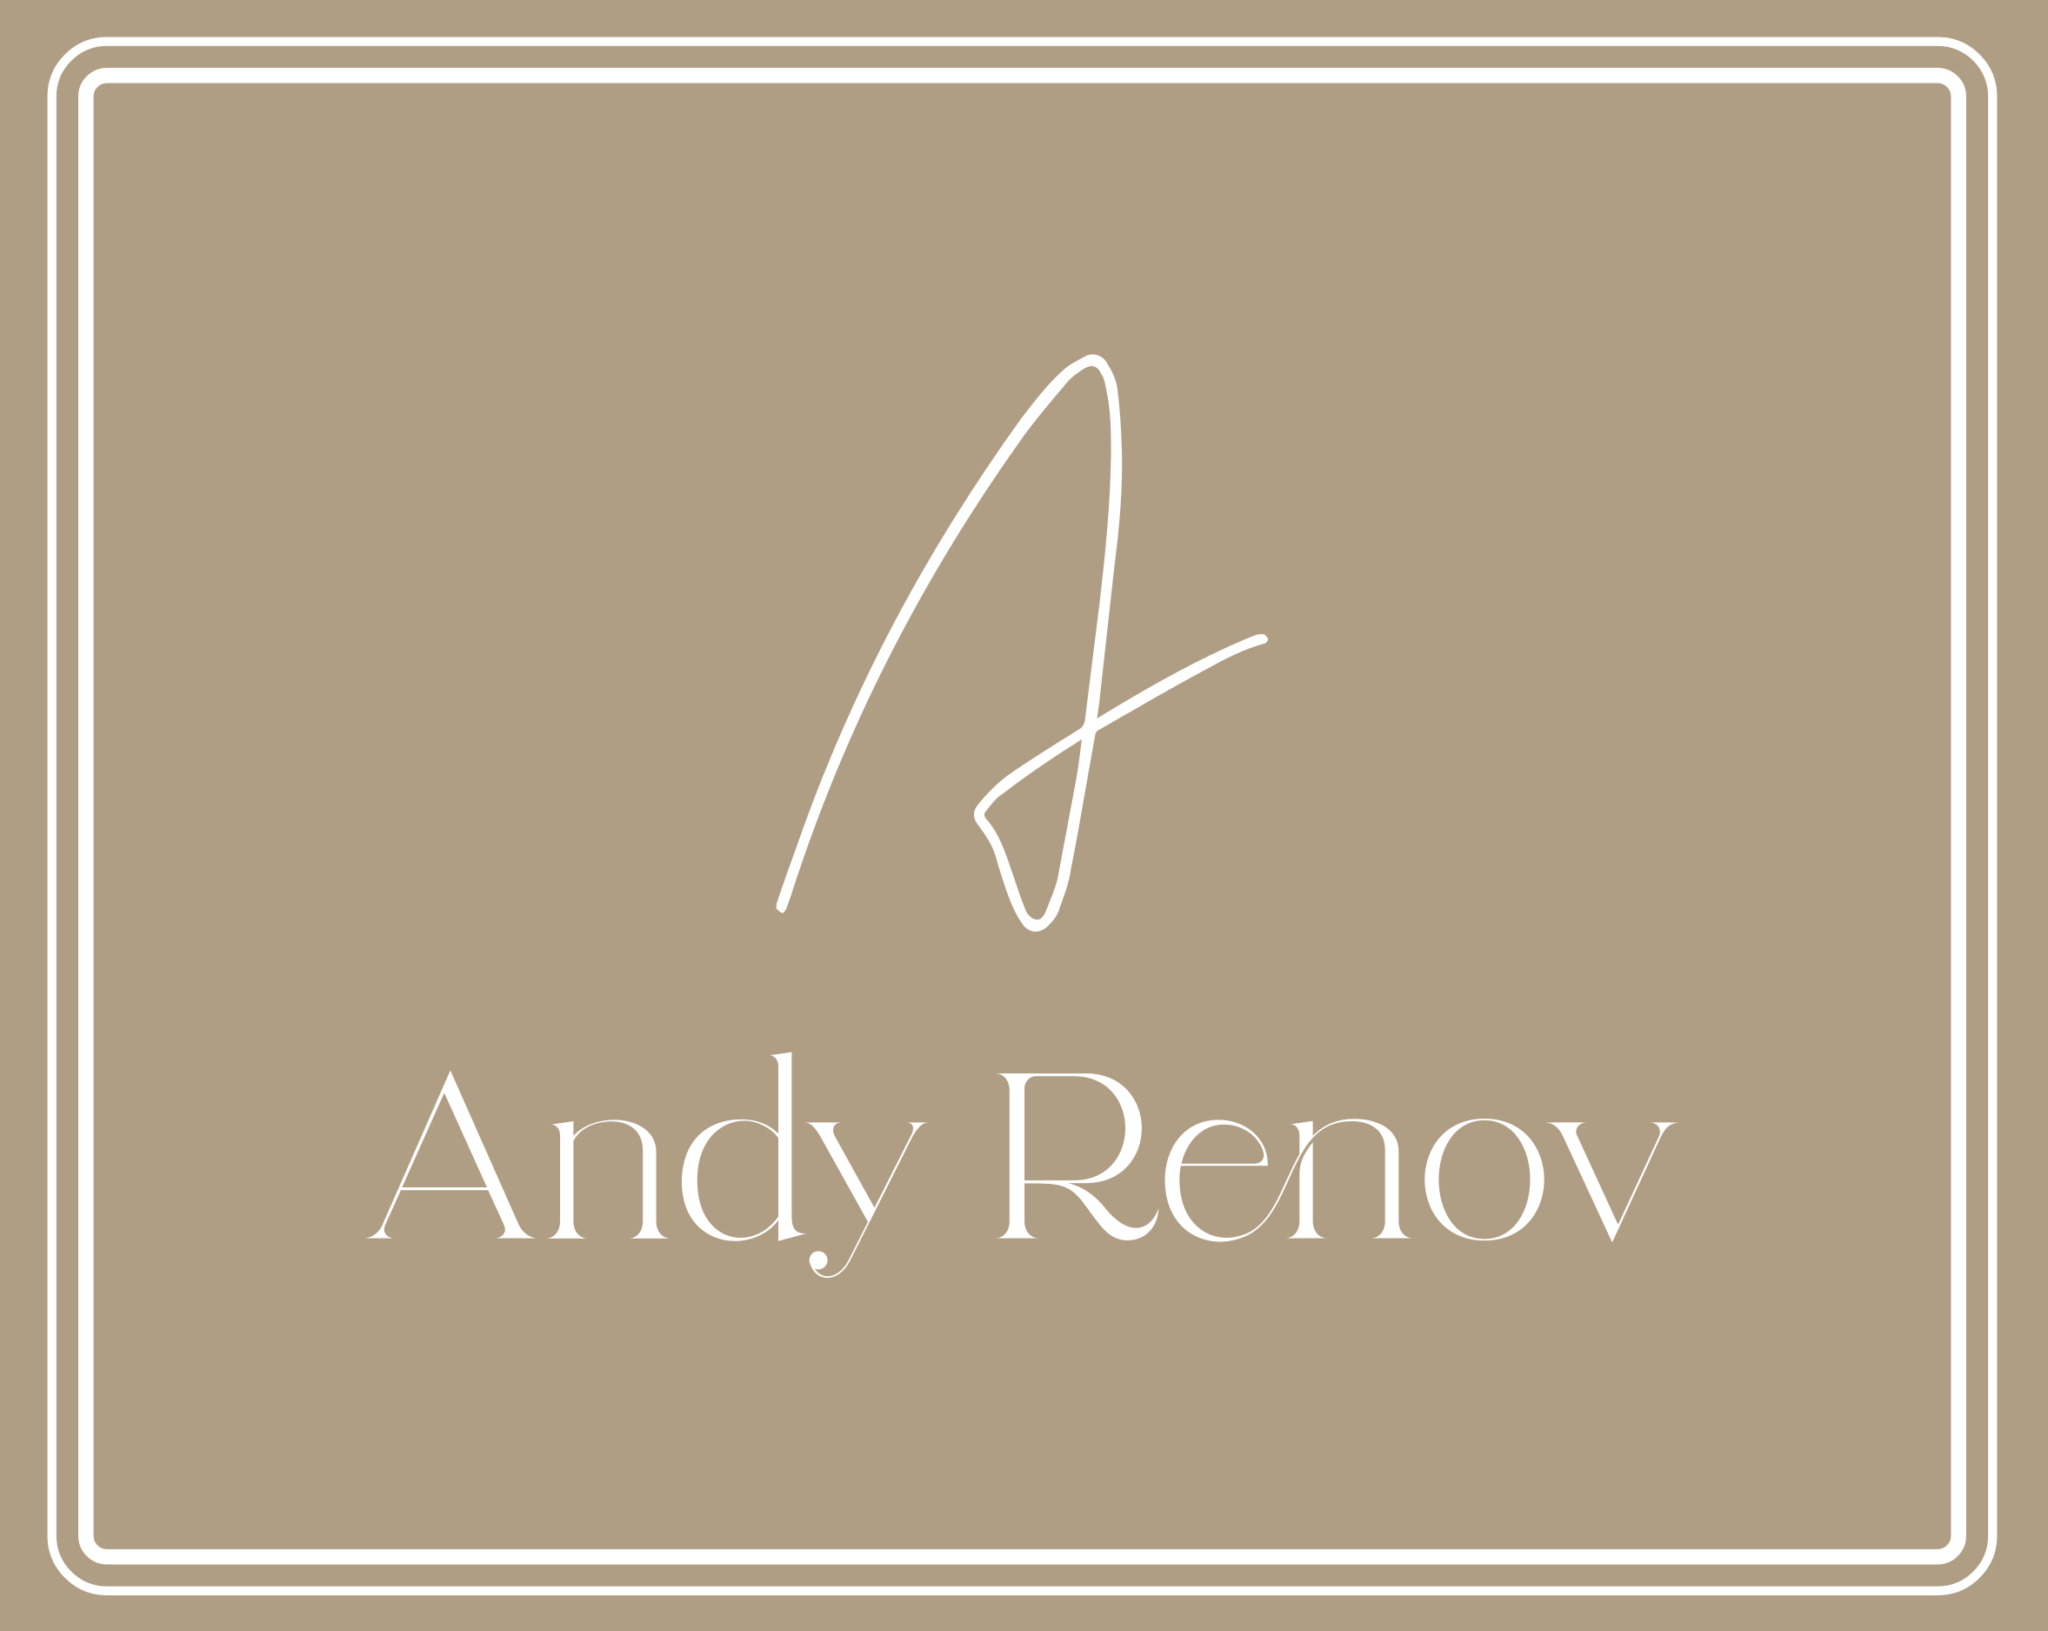 Andy Renov